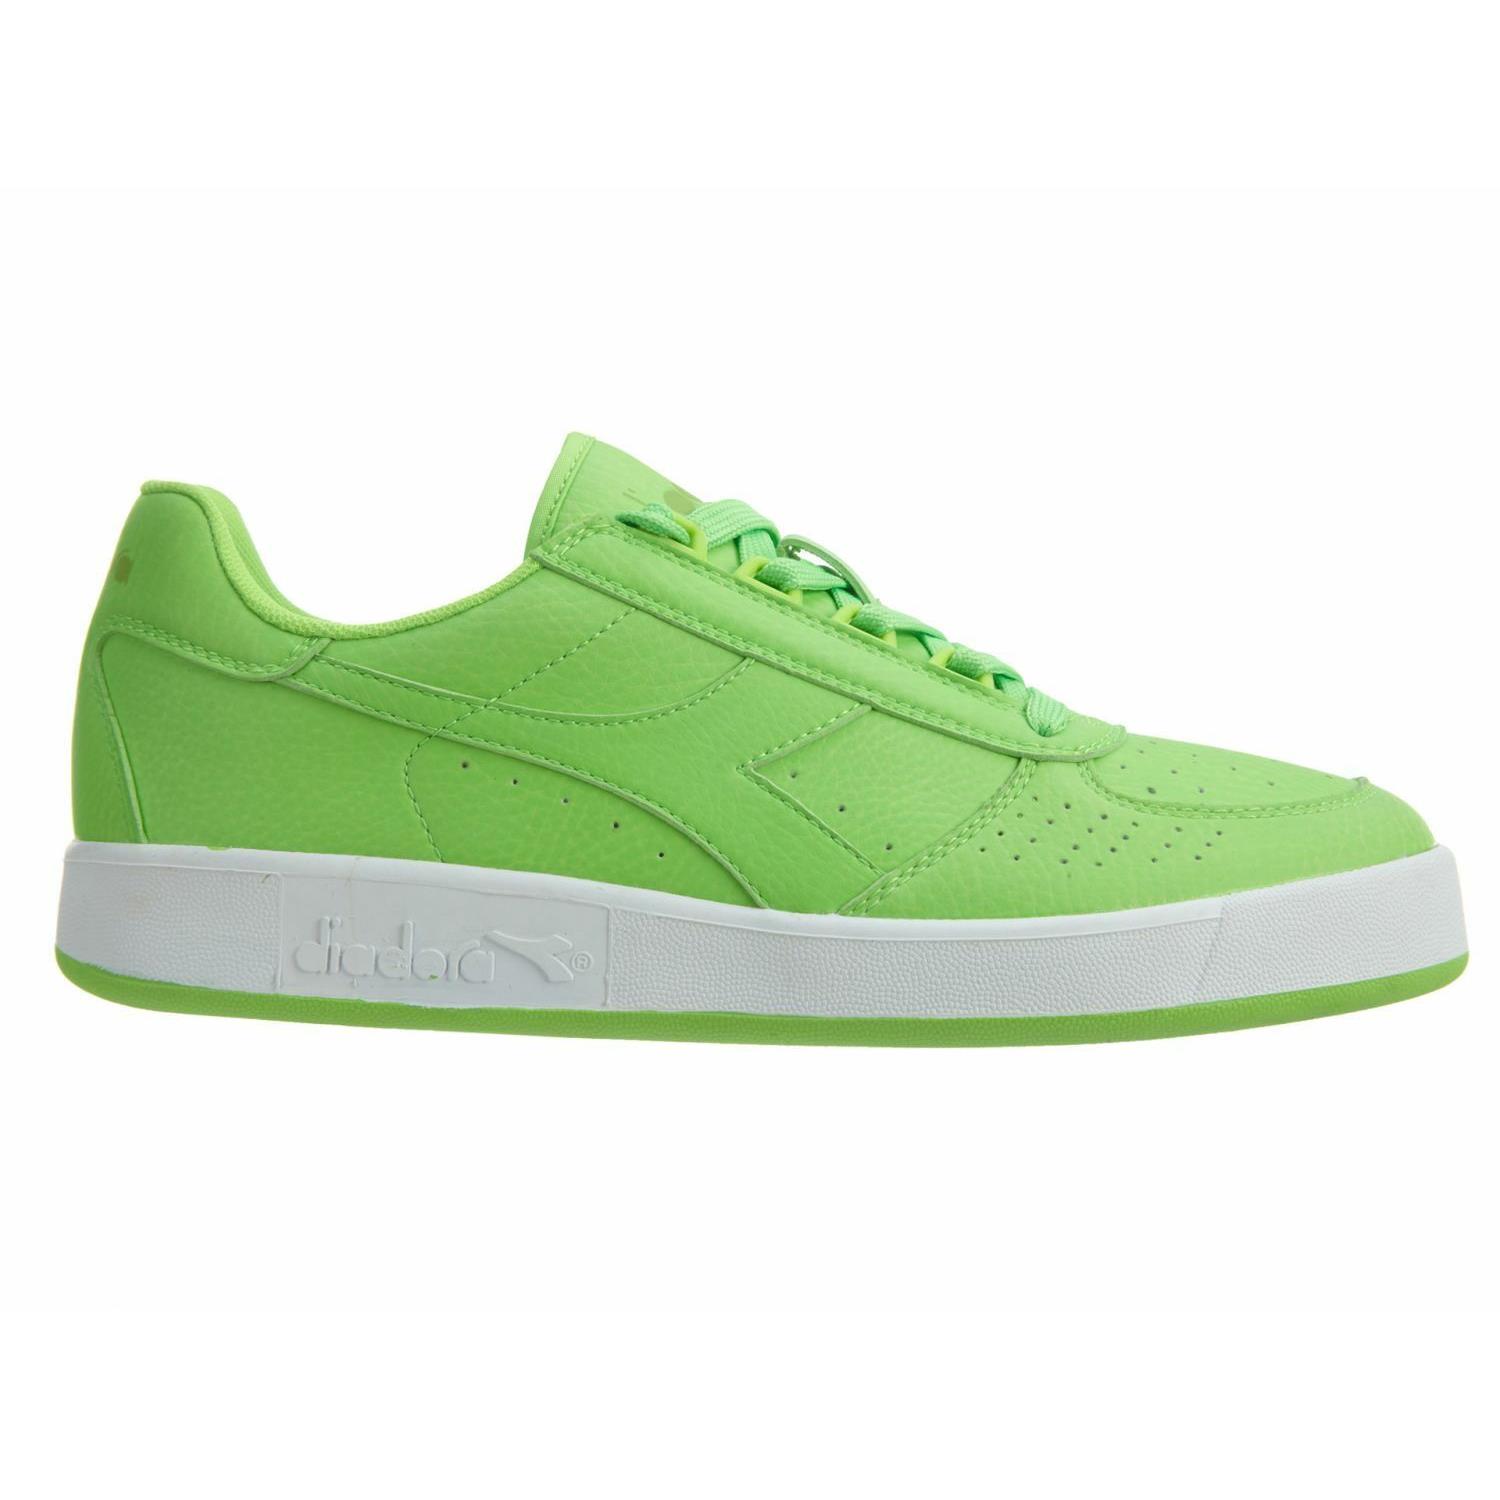 Diadora B.elite Bright Mens 170486-70281 Green White Athletic Shoes Size 11.5